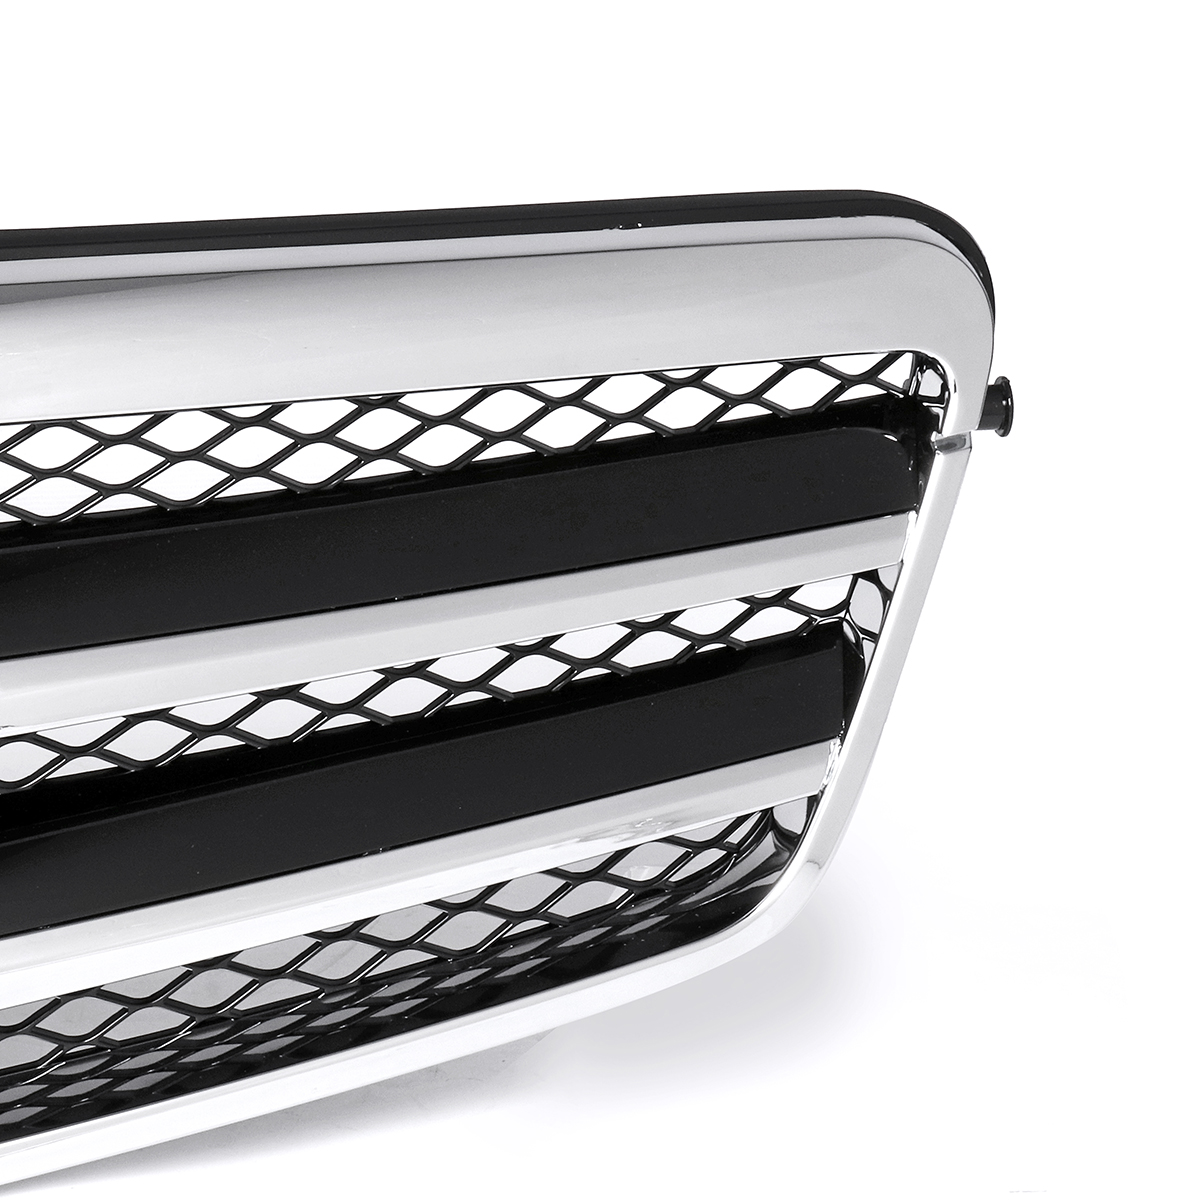 Chrome Silver AMG Style Front Grill Grille for Mercedes Benz W212 E250 E550 E350 E63 AMG 2010-2013